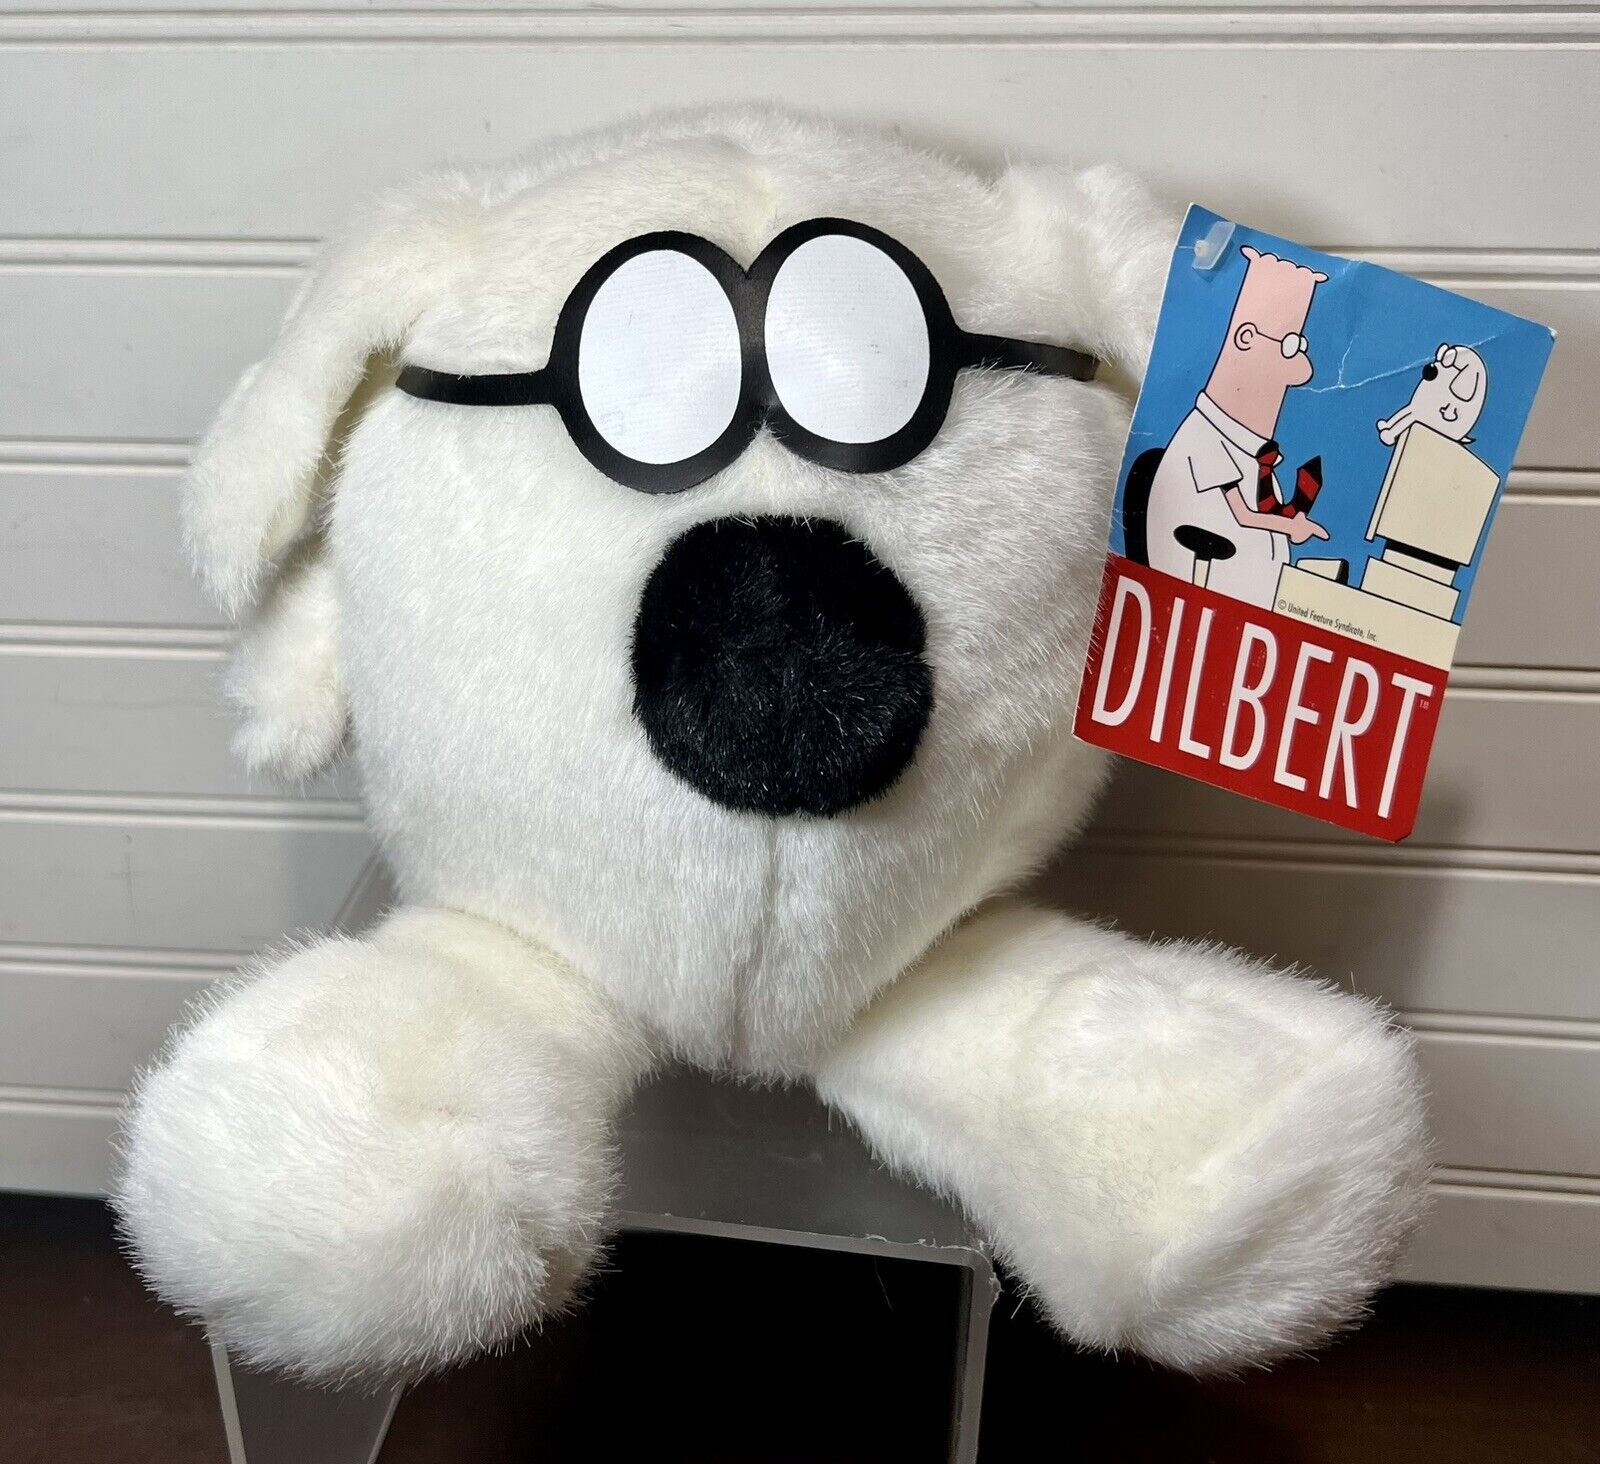 DOGBERT Dilbert comic strip cartoon dog plush White w/ Black Glasses 10” Toy NWT